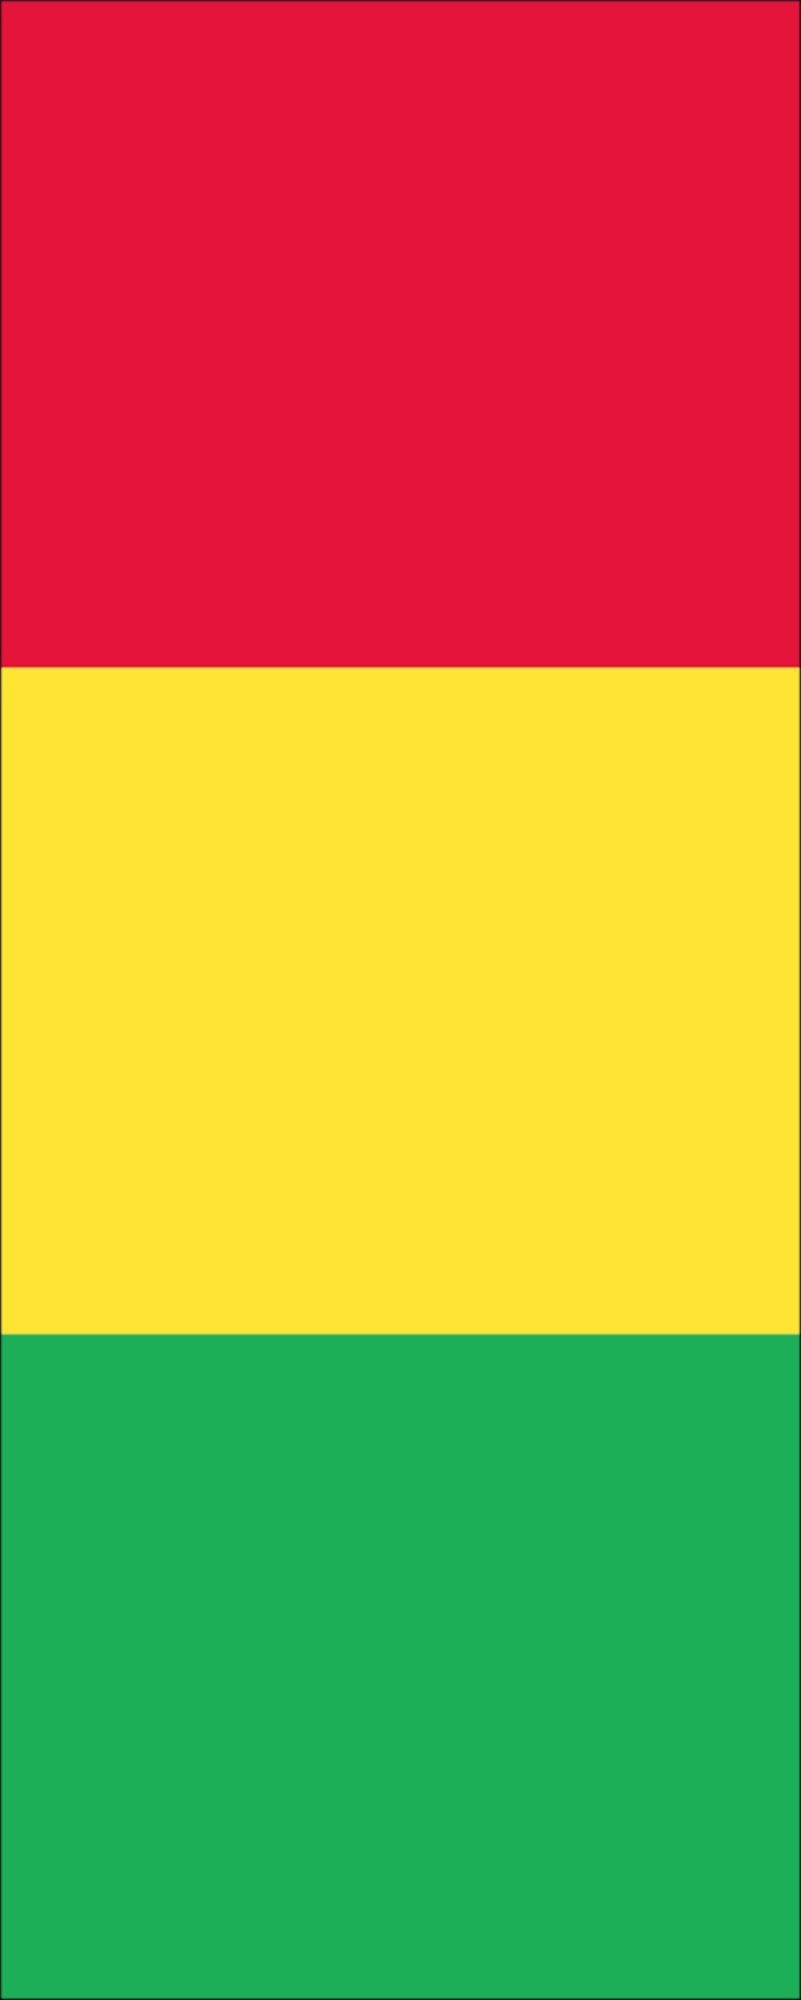 Guinea Flagge Hochformat g/m² flaggenmeer 160